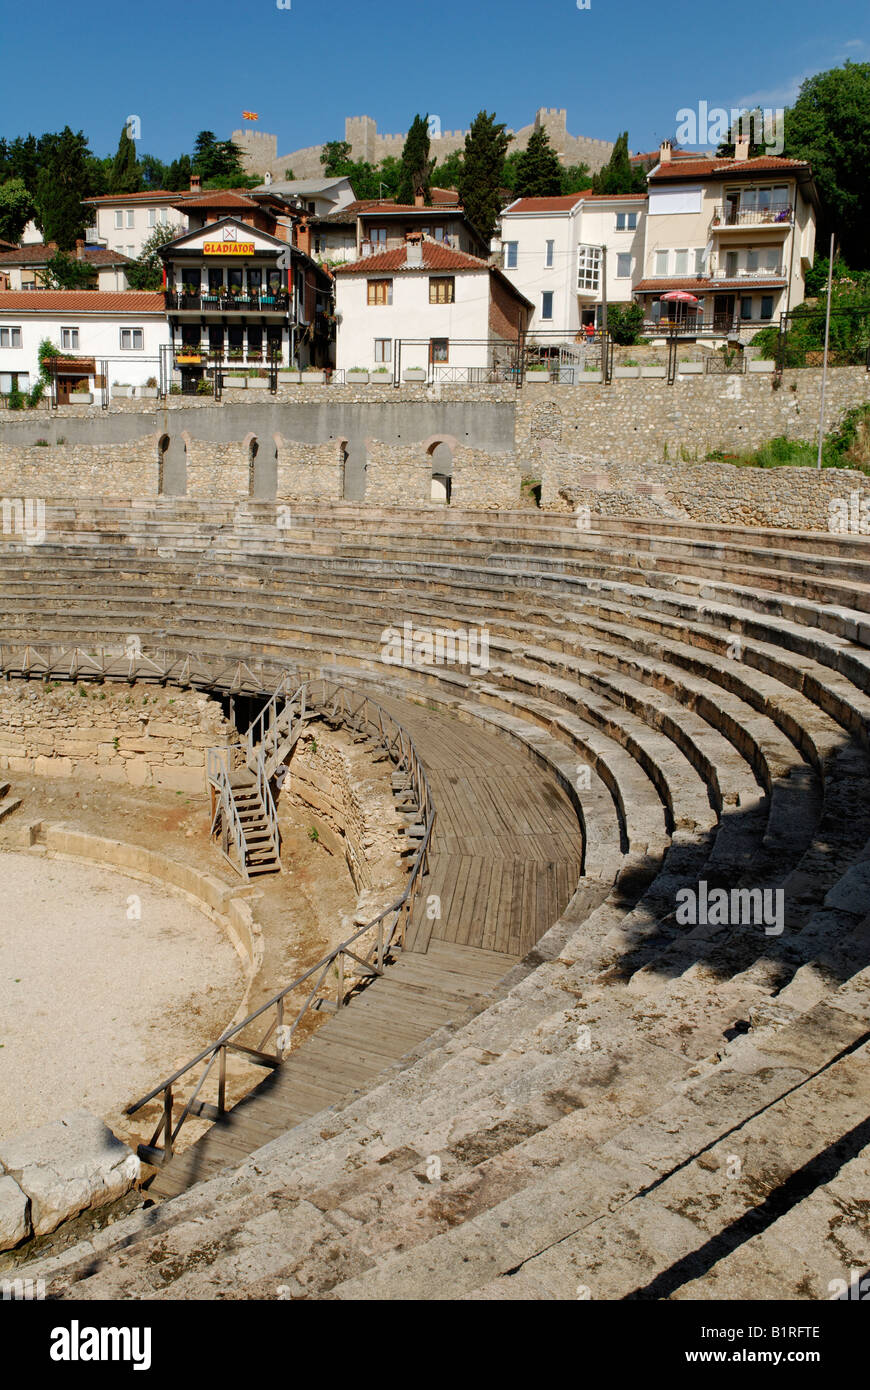 Antike Theater in Ohrid am Ohridsee, UNESCO-Weltkulturerbe, Mazedonien, ehemalige jugoslawische Republik Mazedonien, ehemalige jugoslawische Republik Mazedonien, Eu Stockfoto